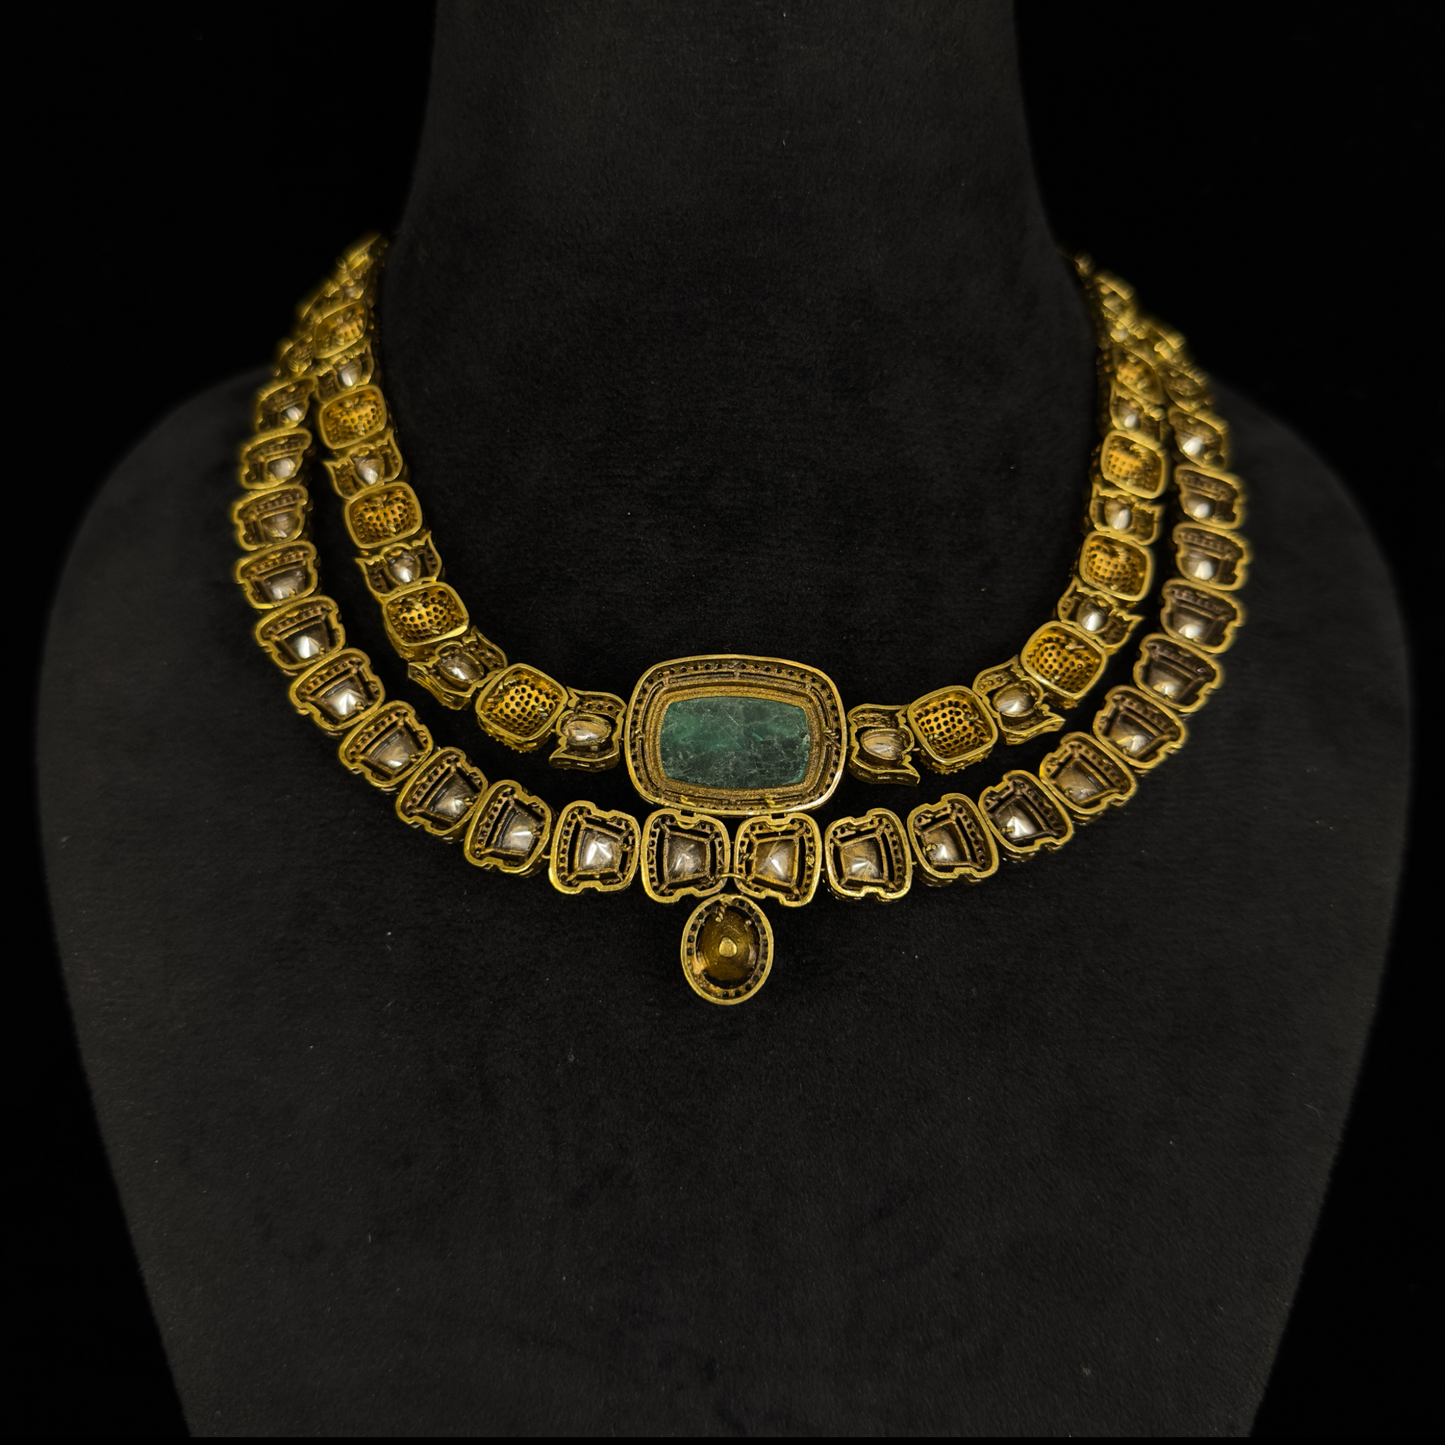 Premium Two-Step Victorian Necklace Set in Mint colour